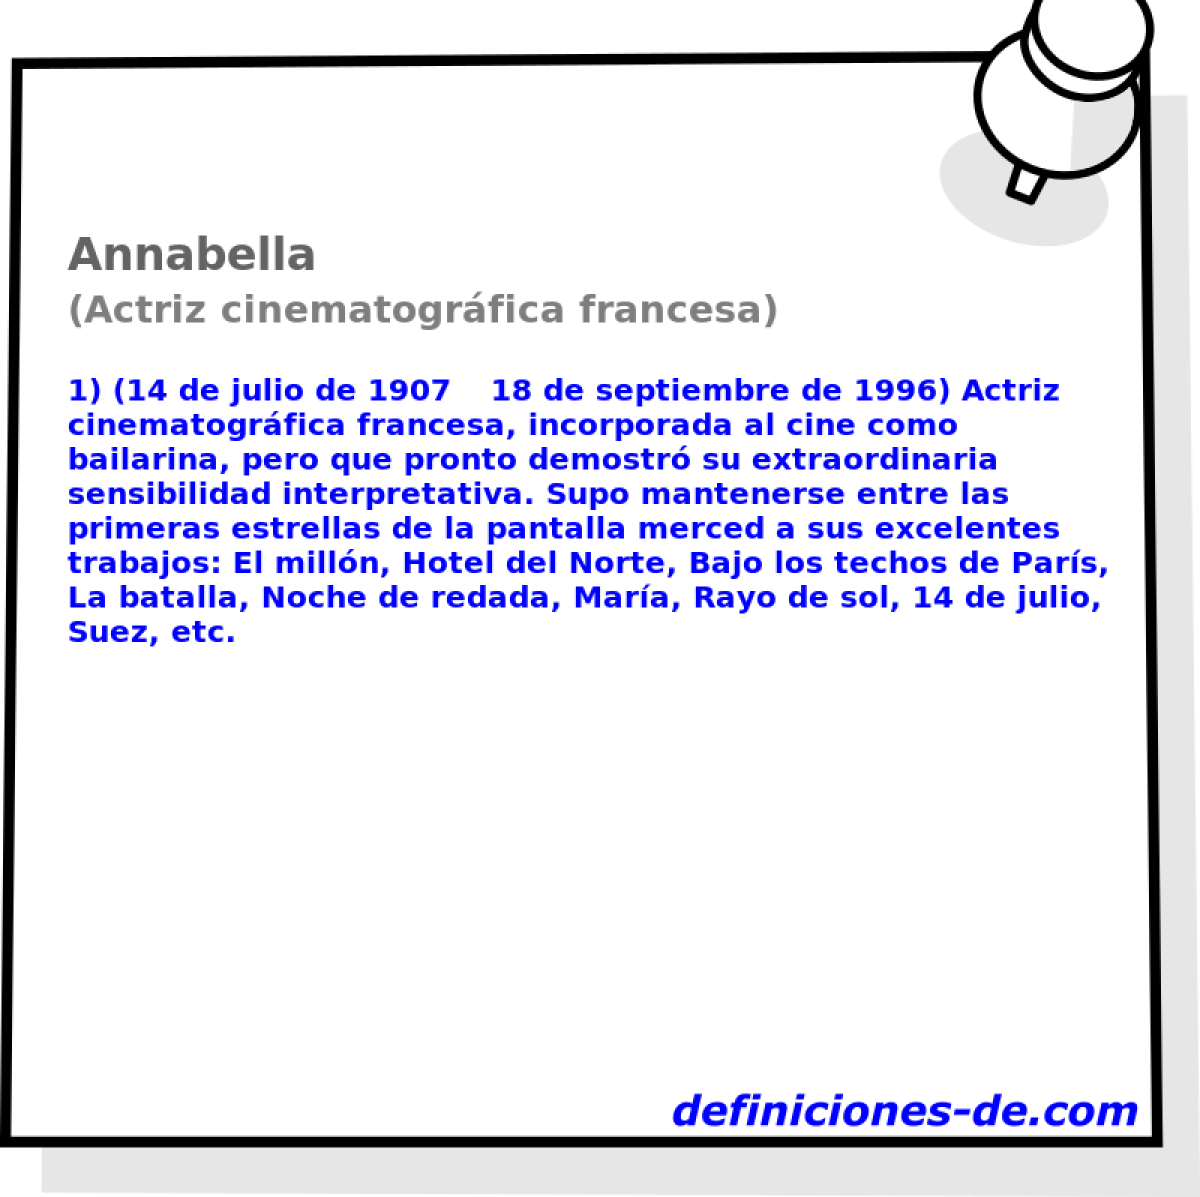 Annabella (Actriz cinematogrfica francesa)